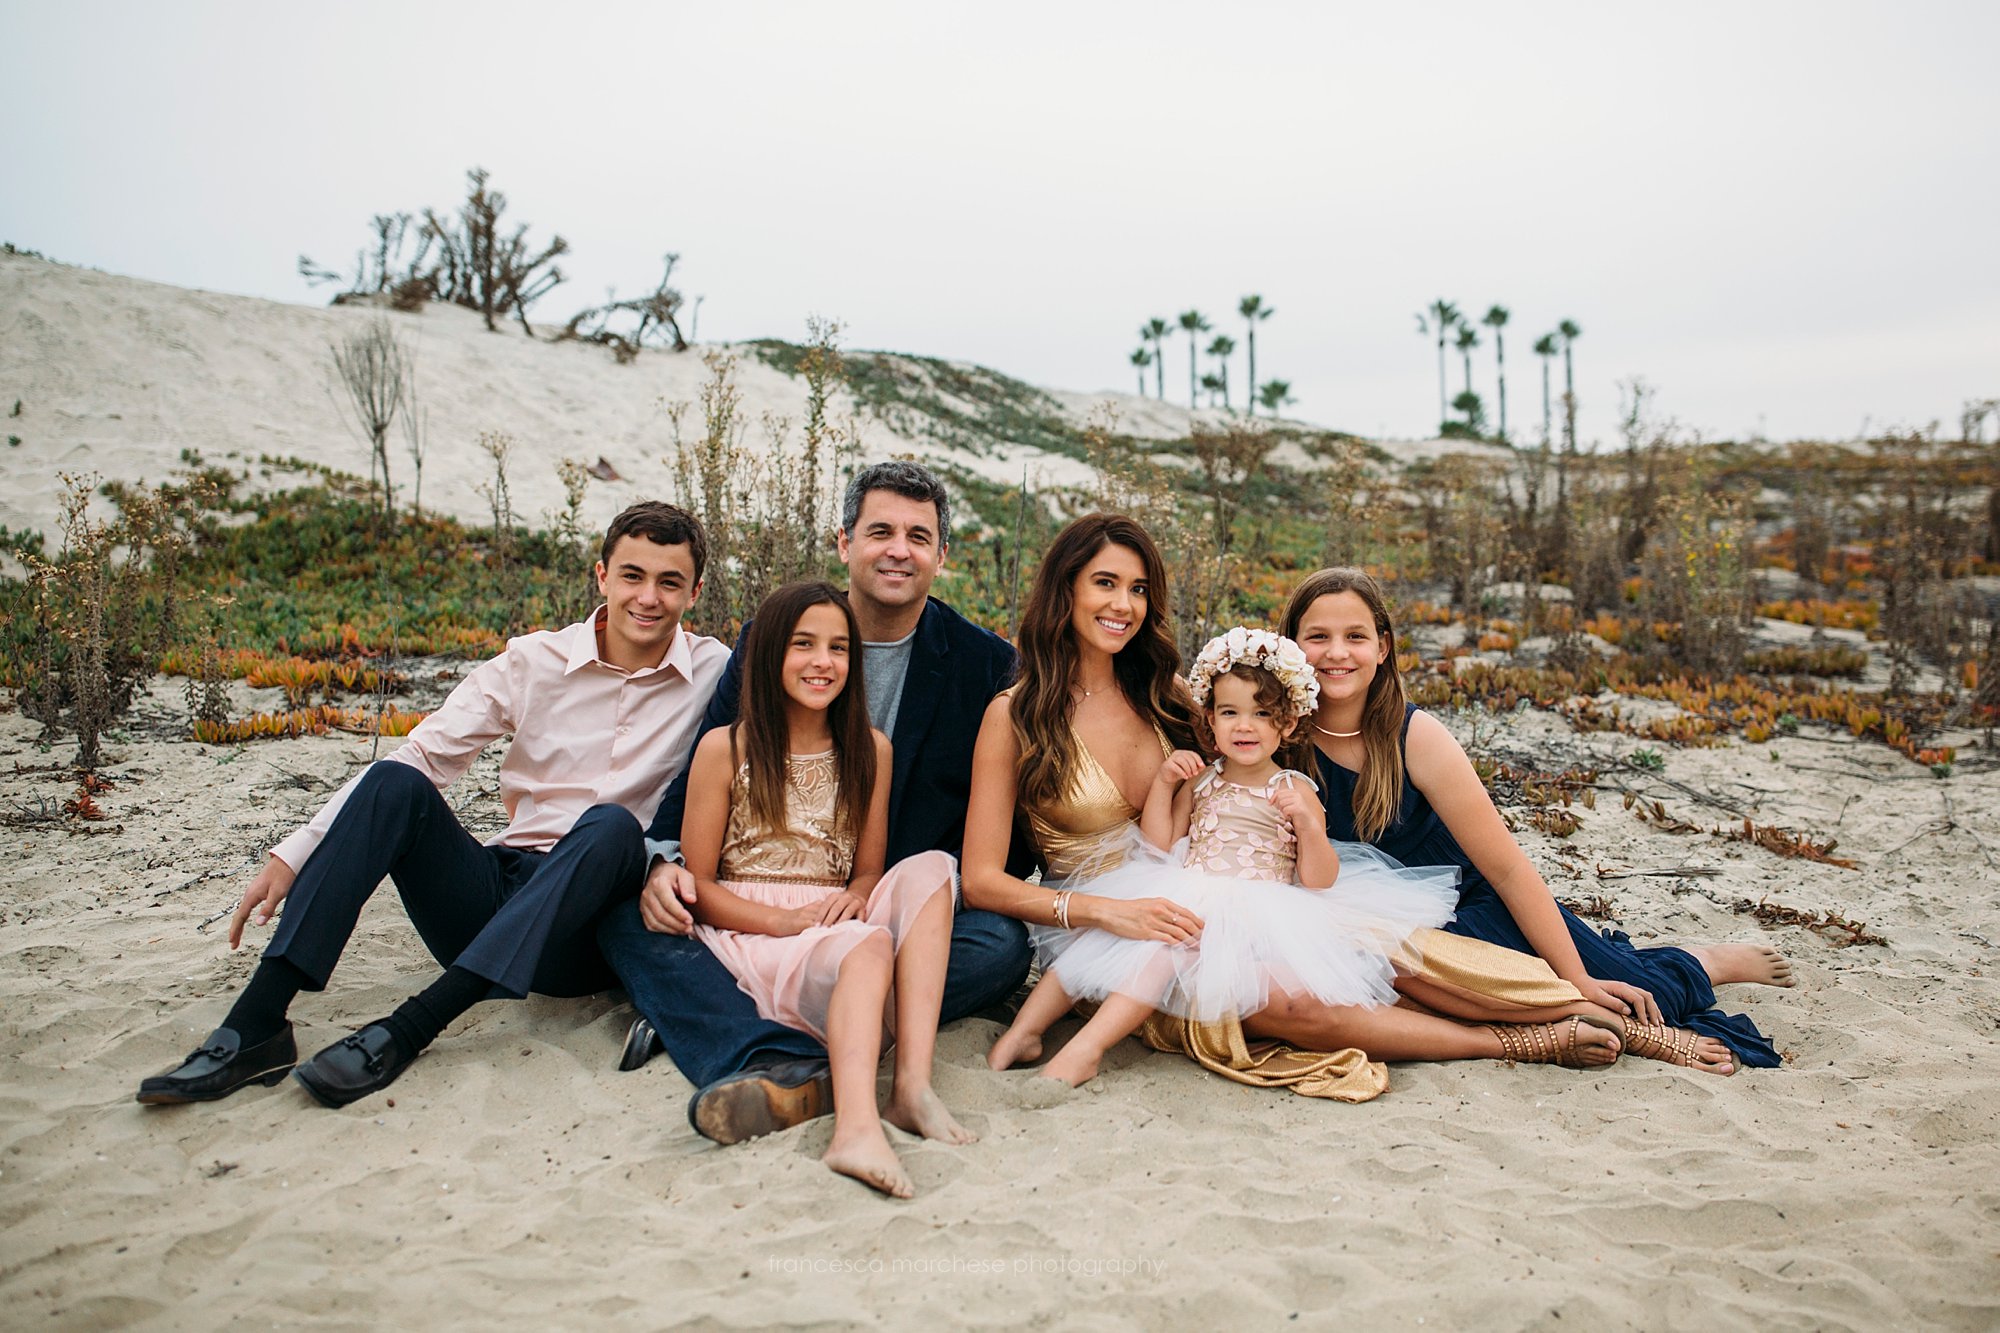 Francesca Marchese Photography - Family Photographer Starkman Family sunset beach session - formal attire for a family session, family of 6